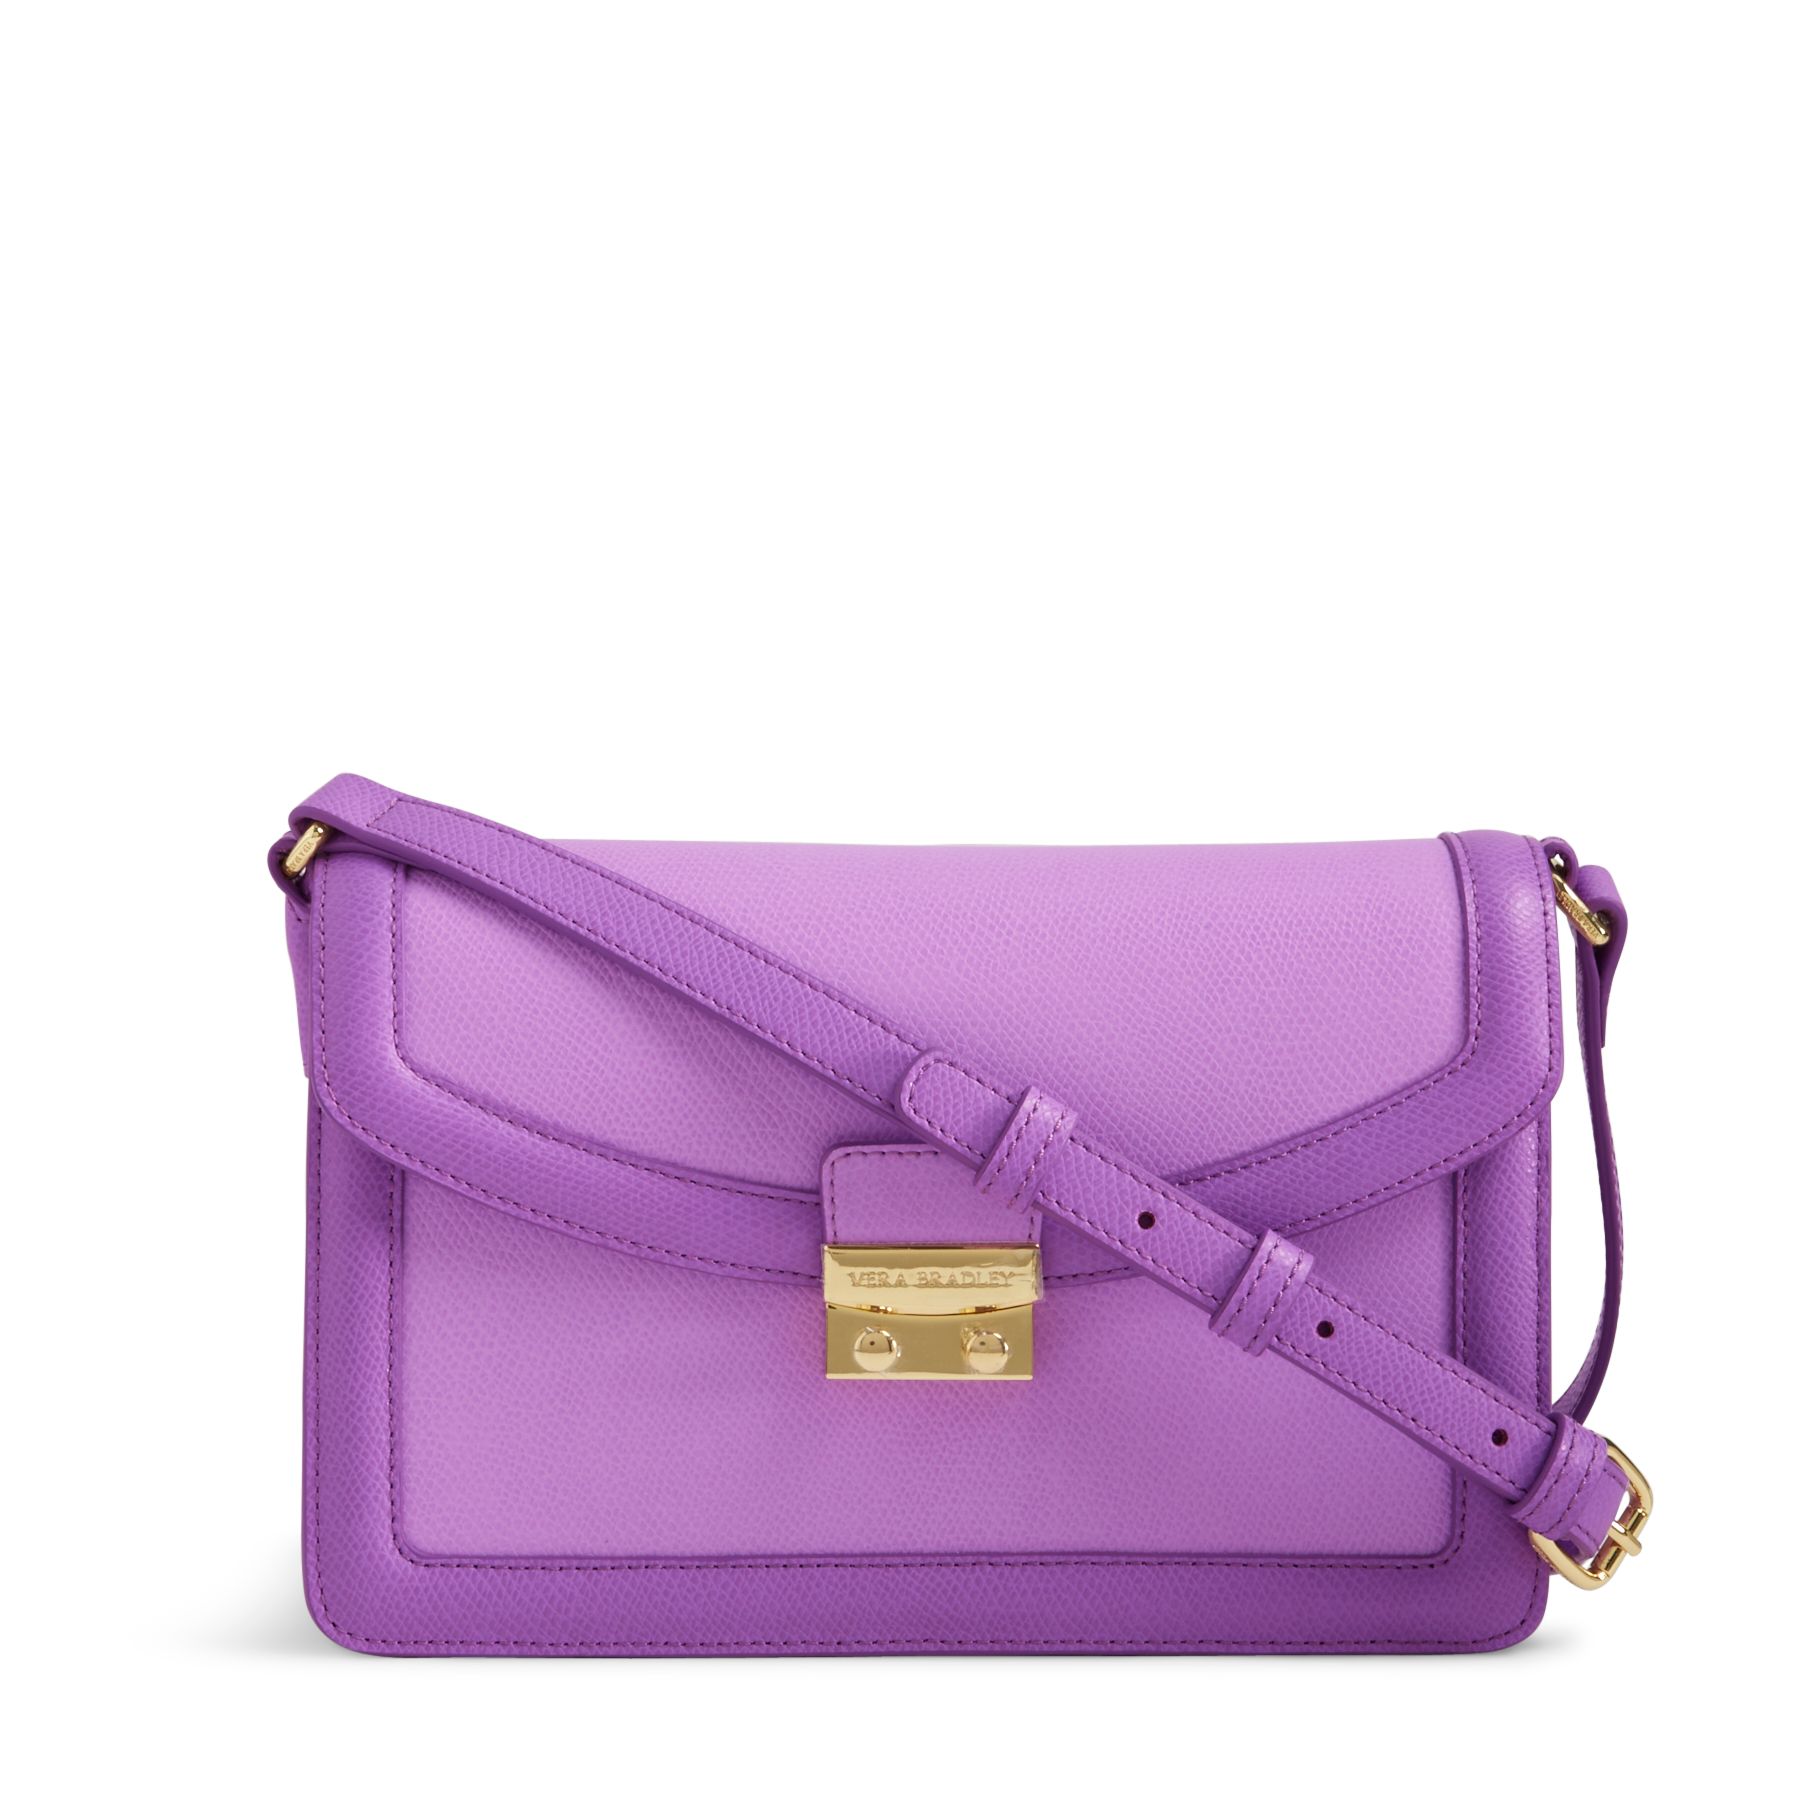 Vera Bradley Leather Tess Crossbody Bag | eBay